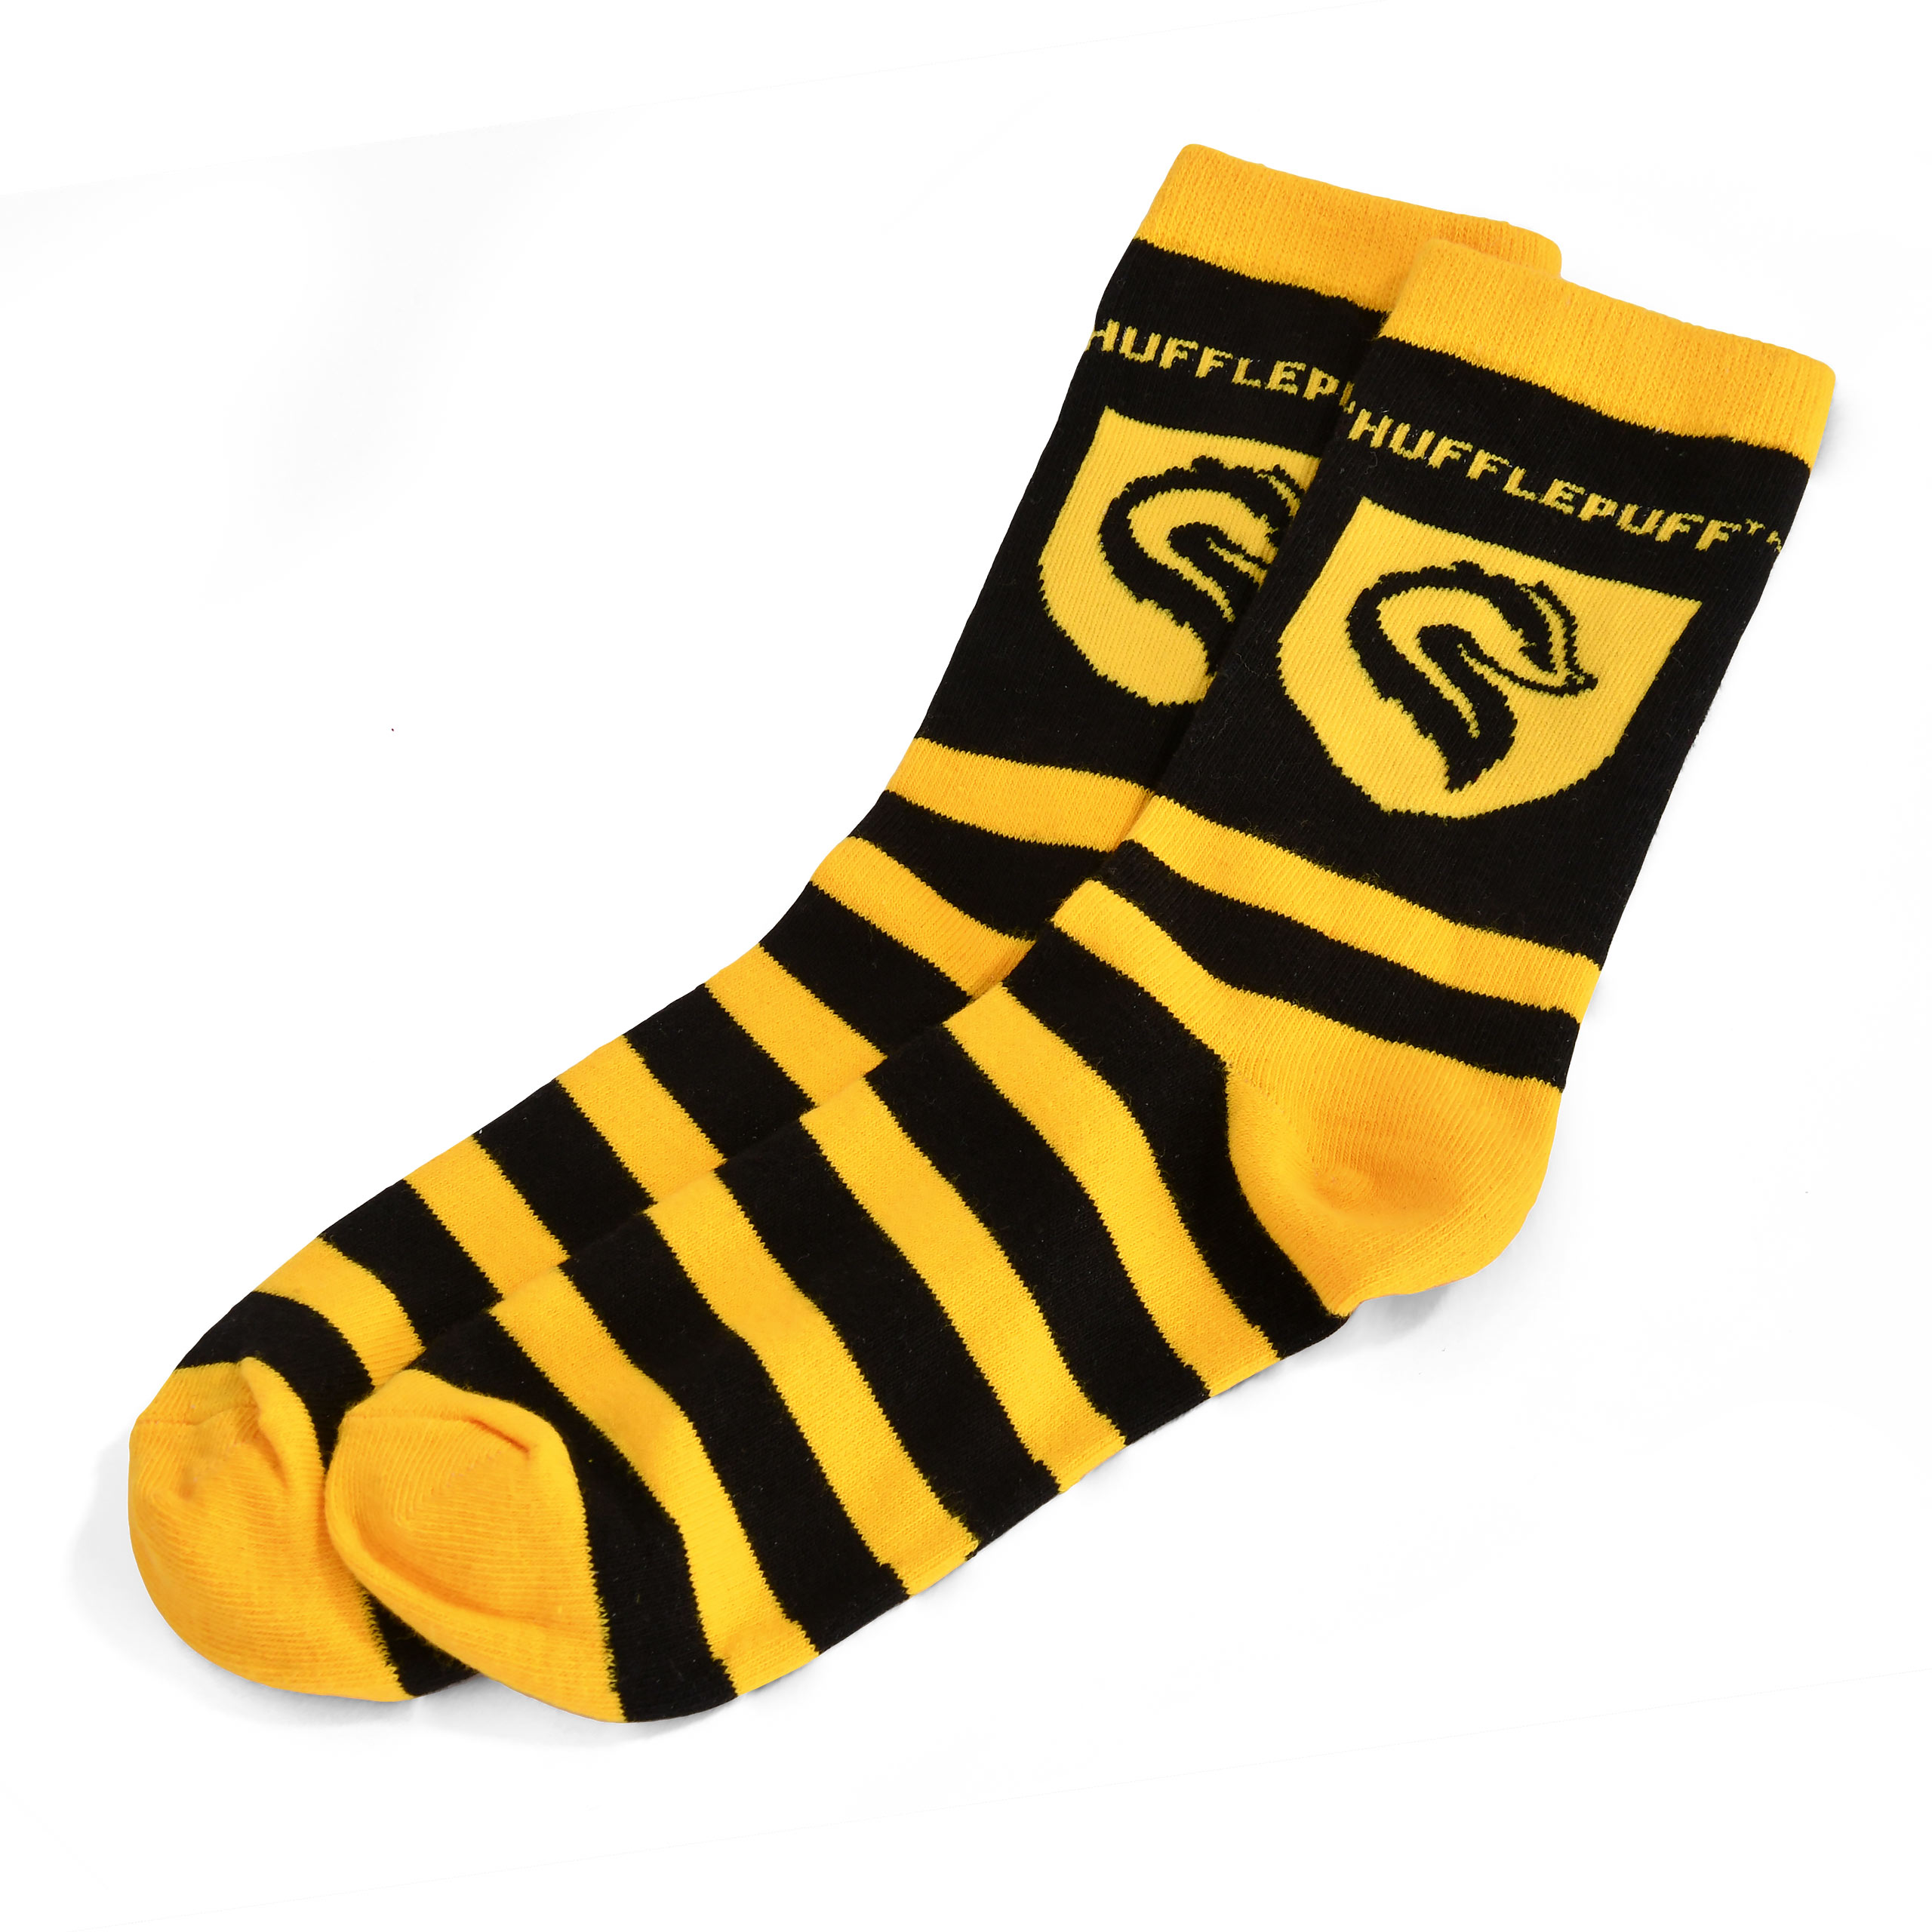 Harry Potter - Hufflepuff Wappen Socken gelb-schwarz